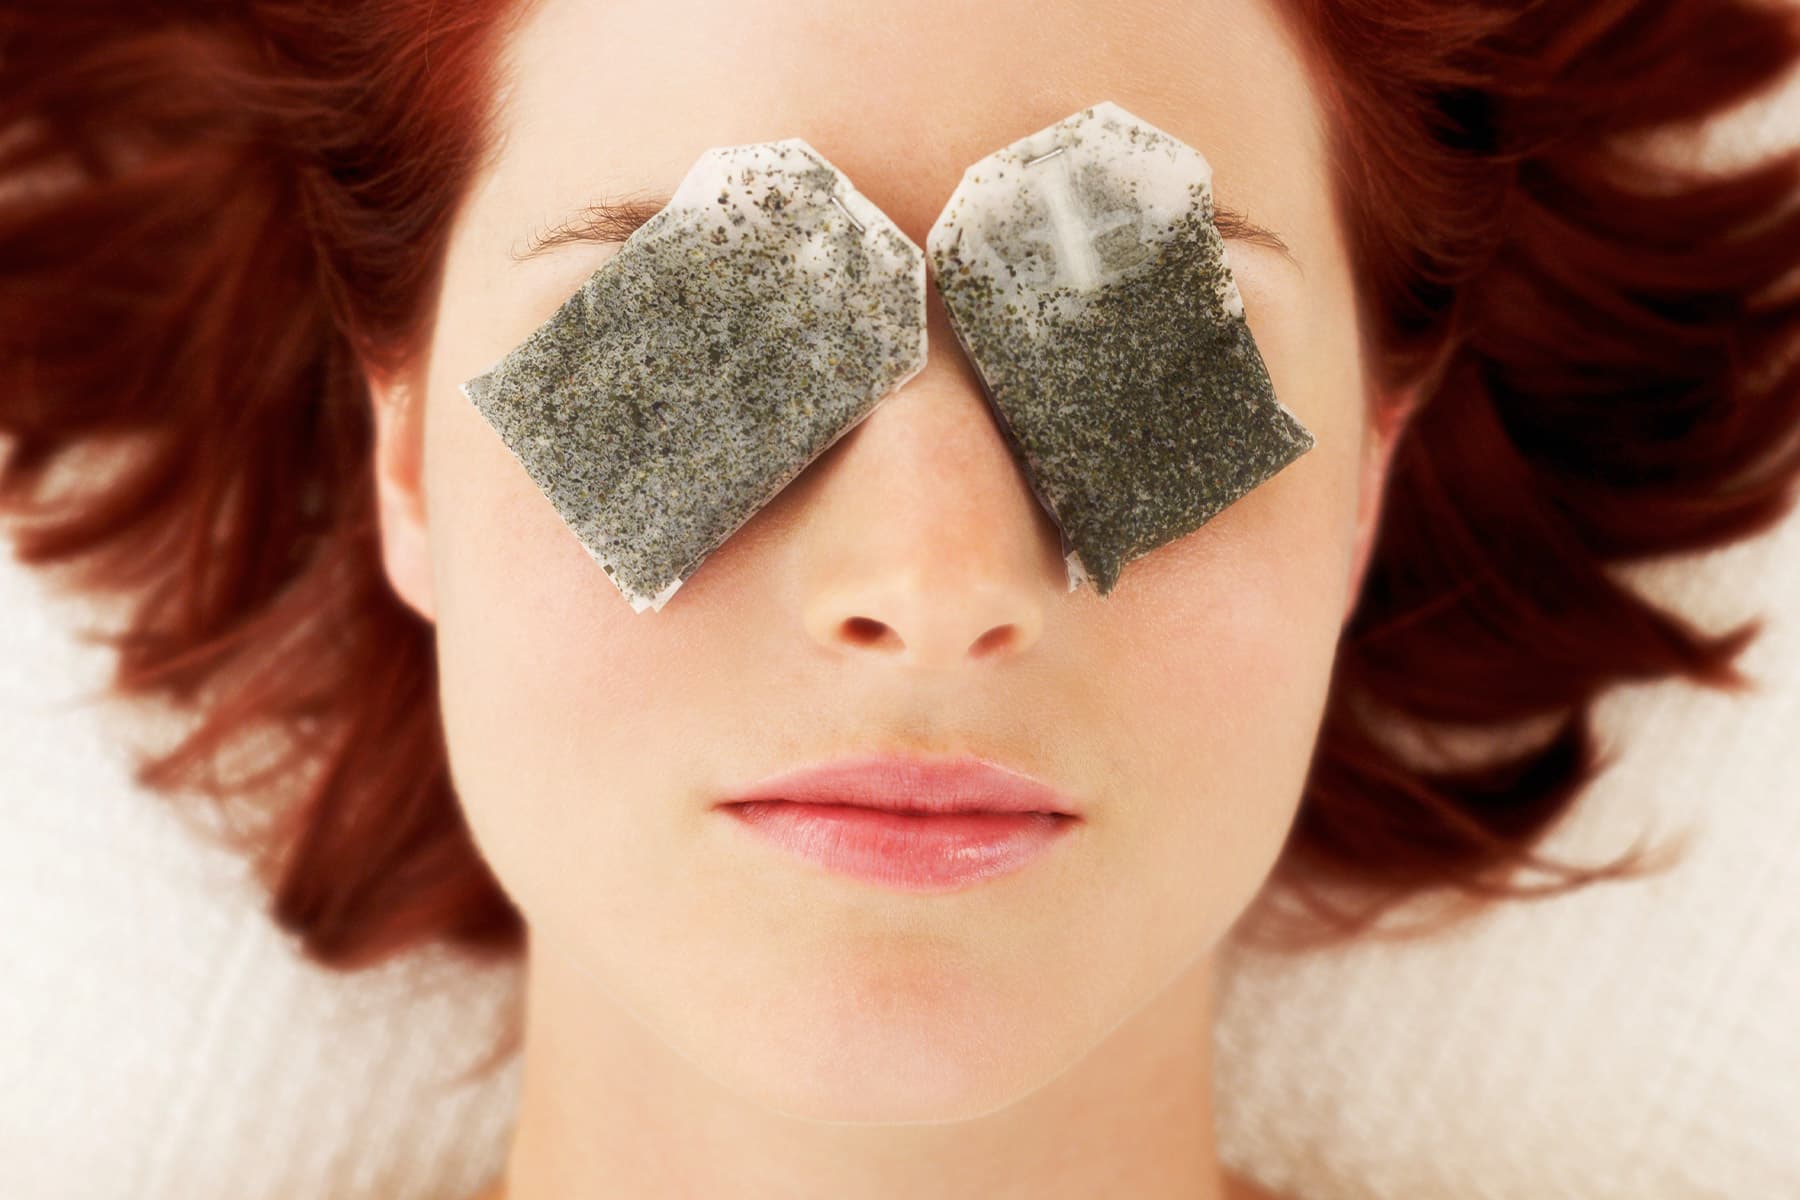 eye fatigue treatment with teabag